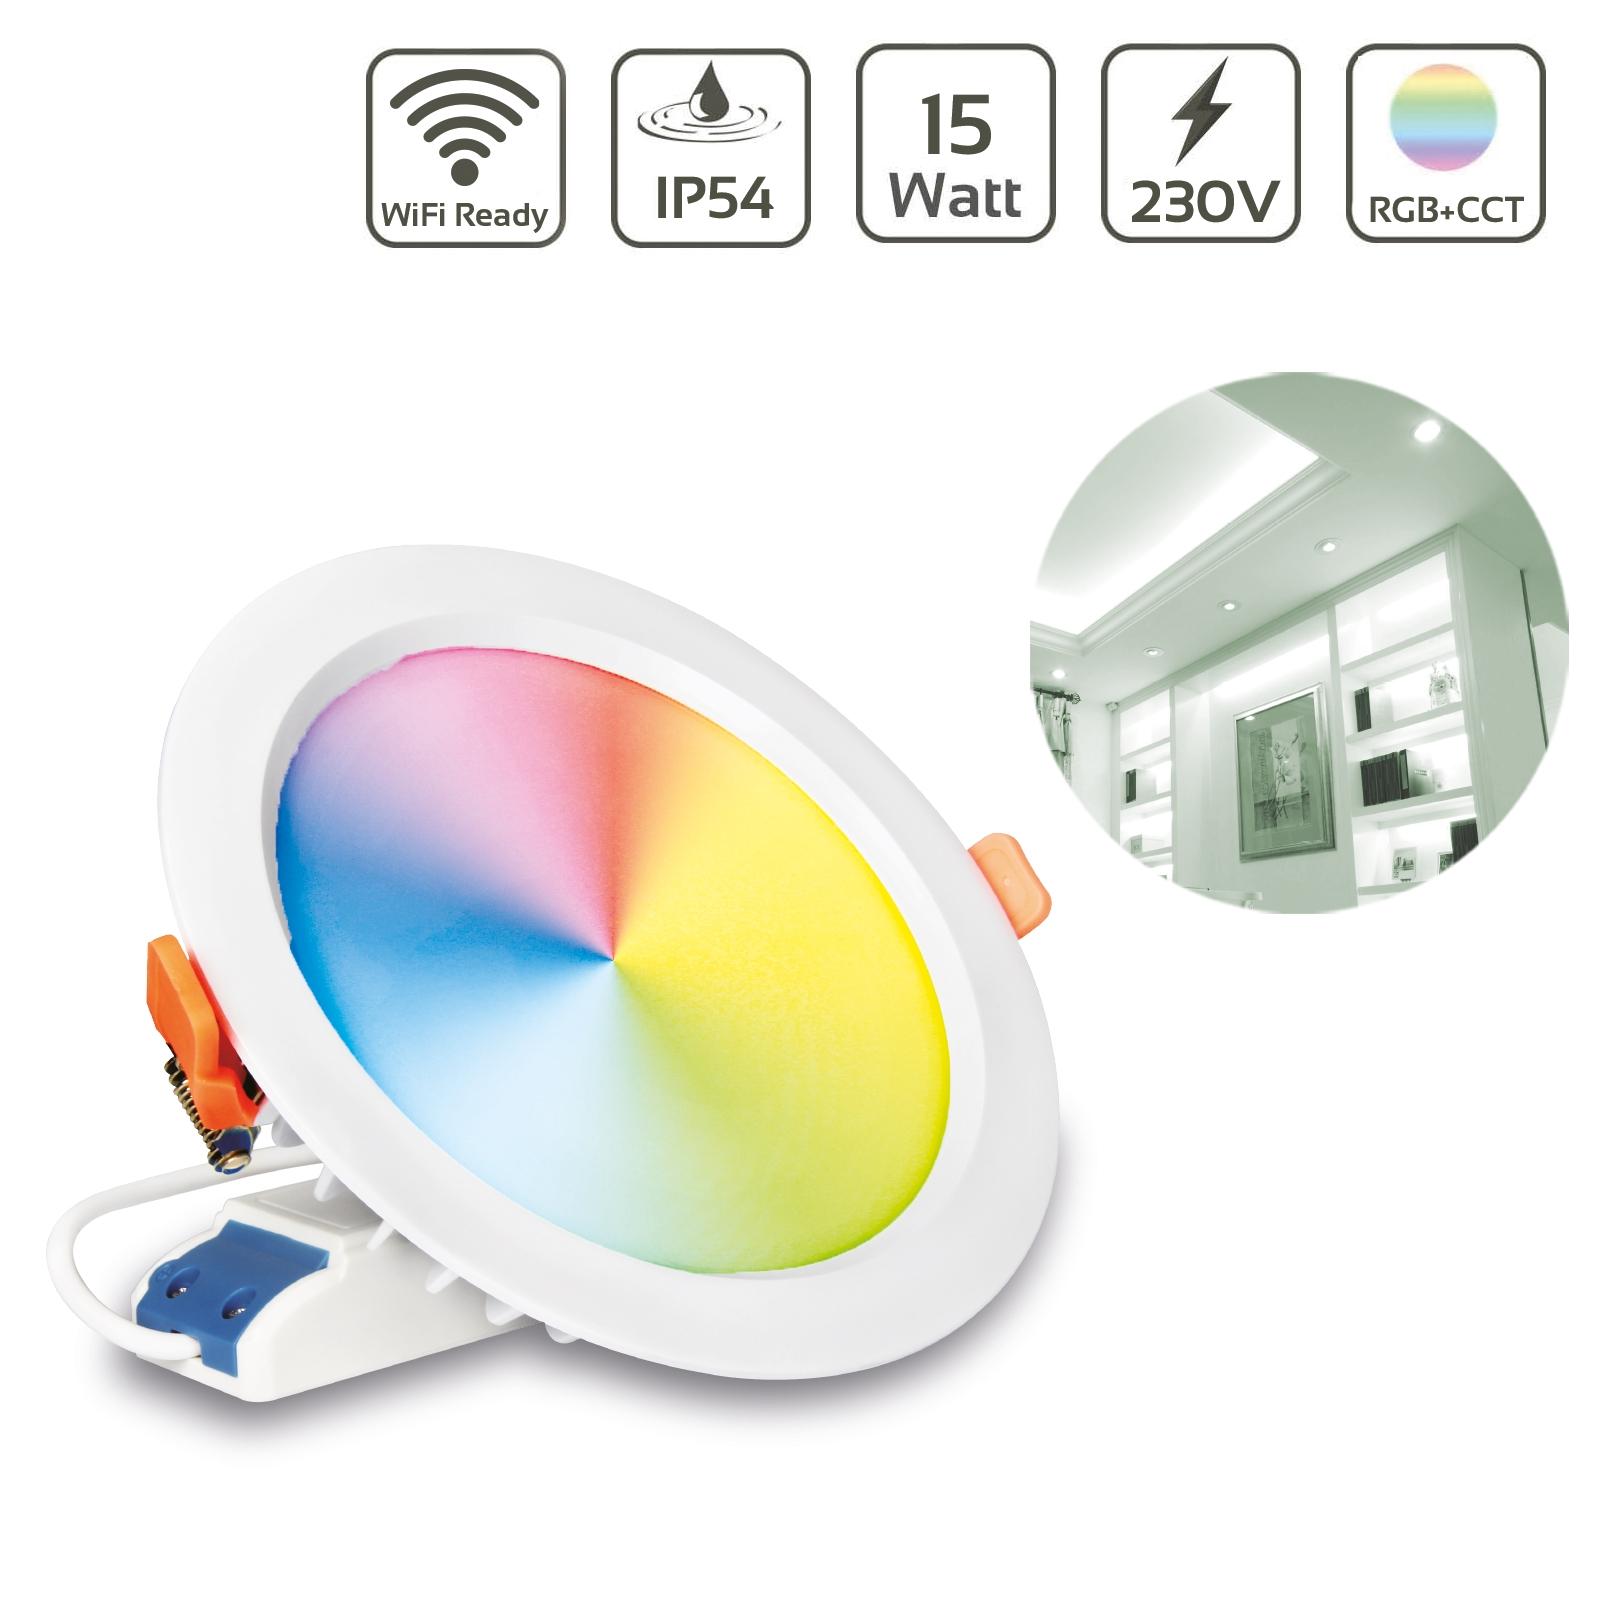 MiBoxer RGB+CCT LED Einbaustrahler rund weiss 15W Ø190mm IP54 2.4GHz WiFi ready FUT069